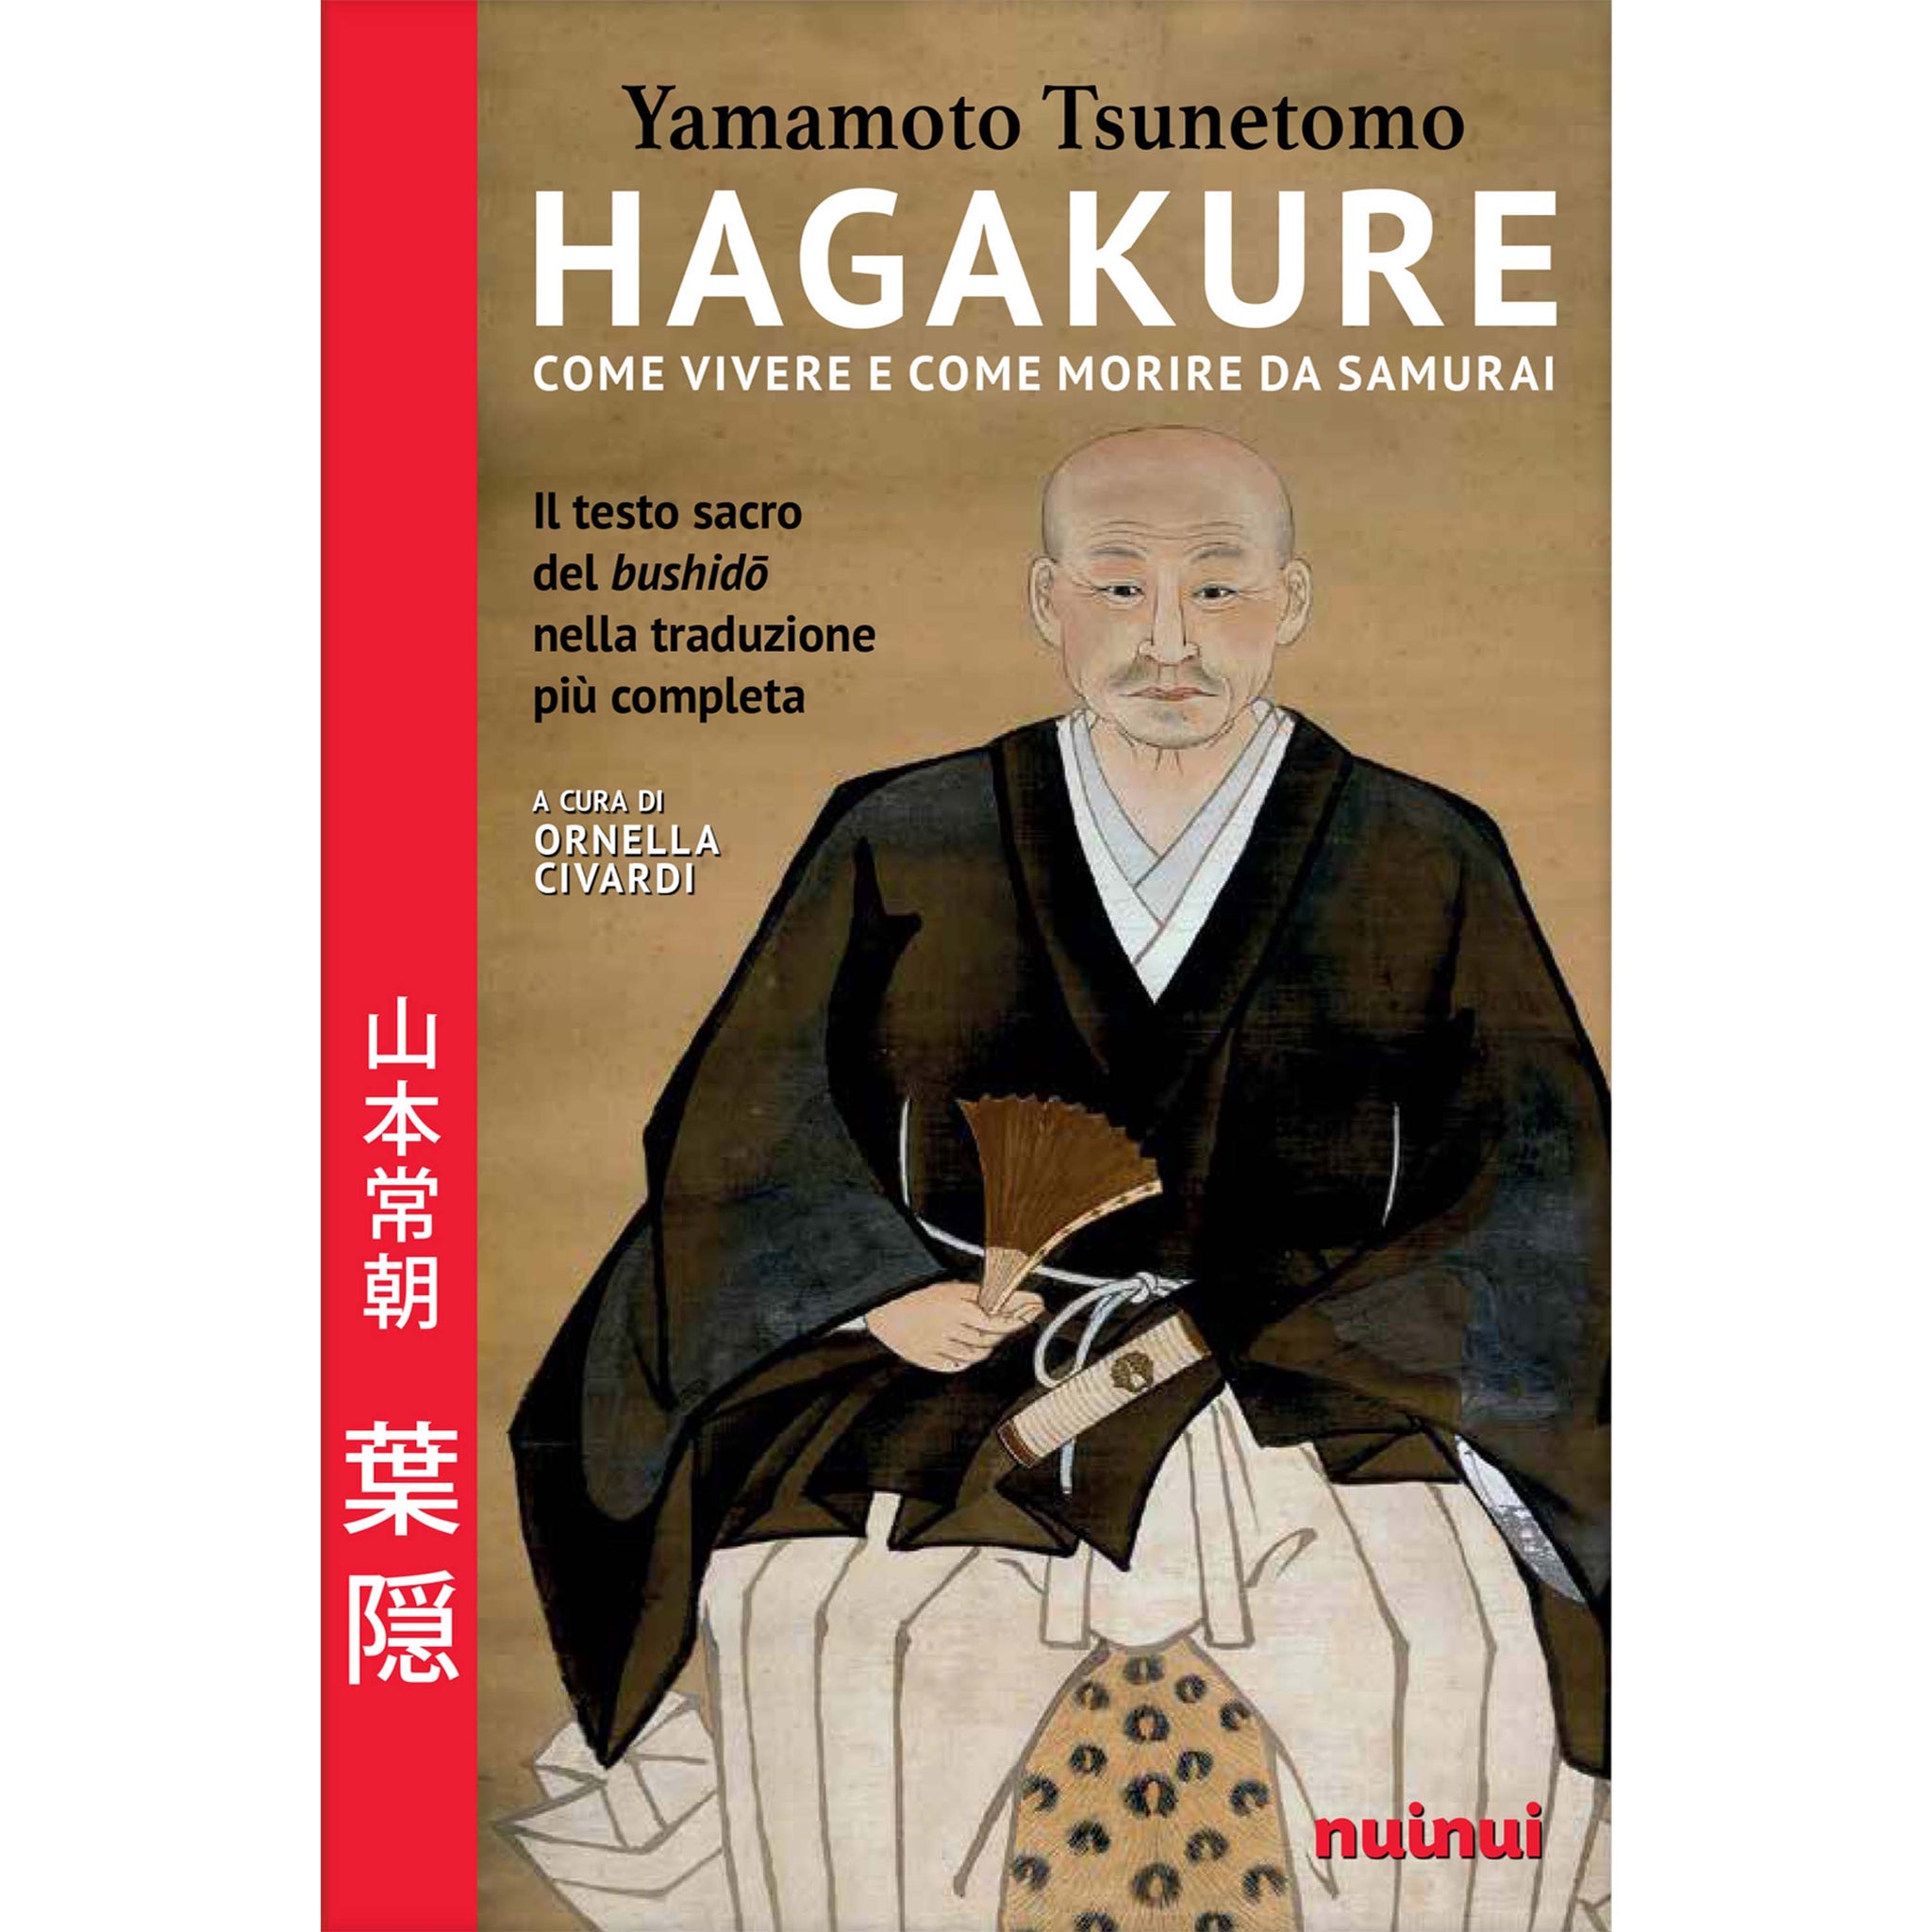 Hagakure - How to live and die like a samurai